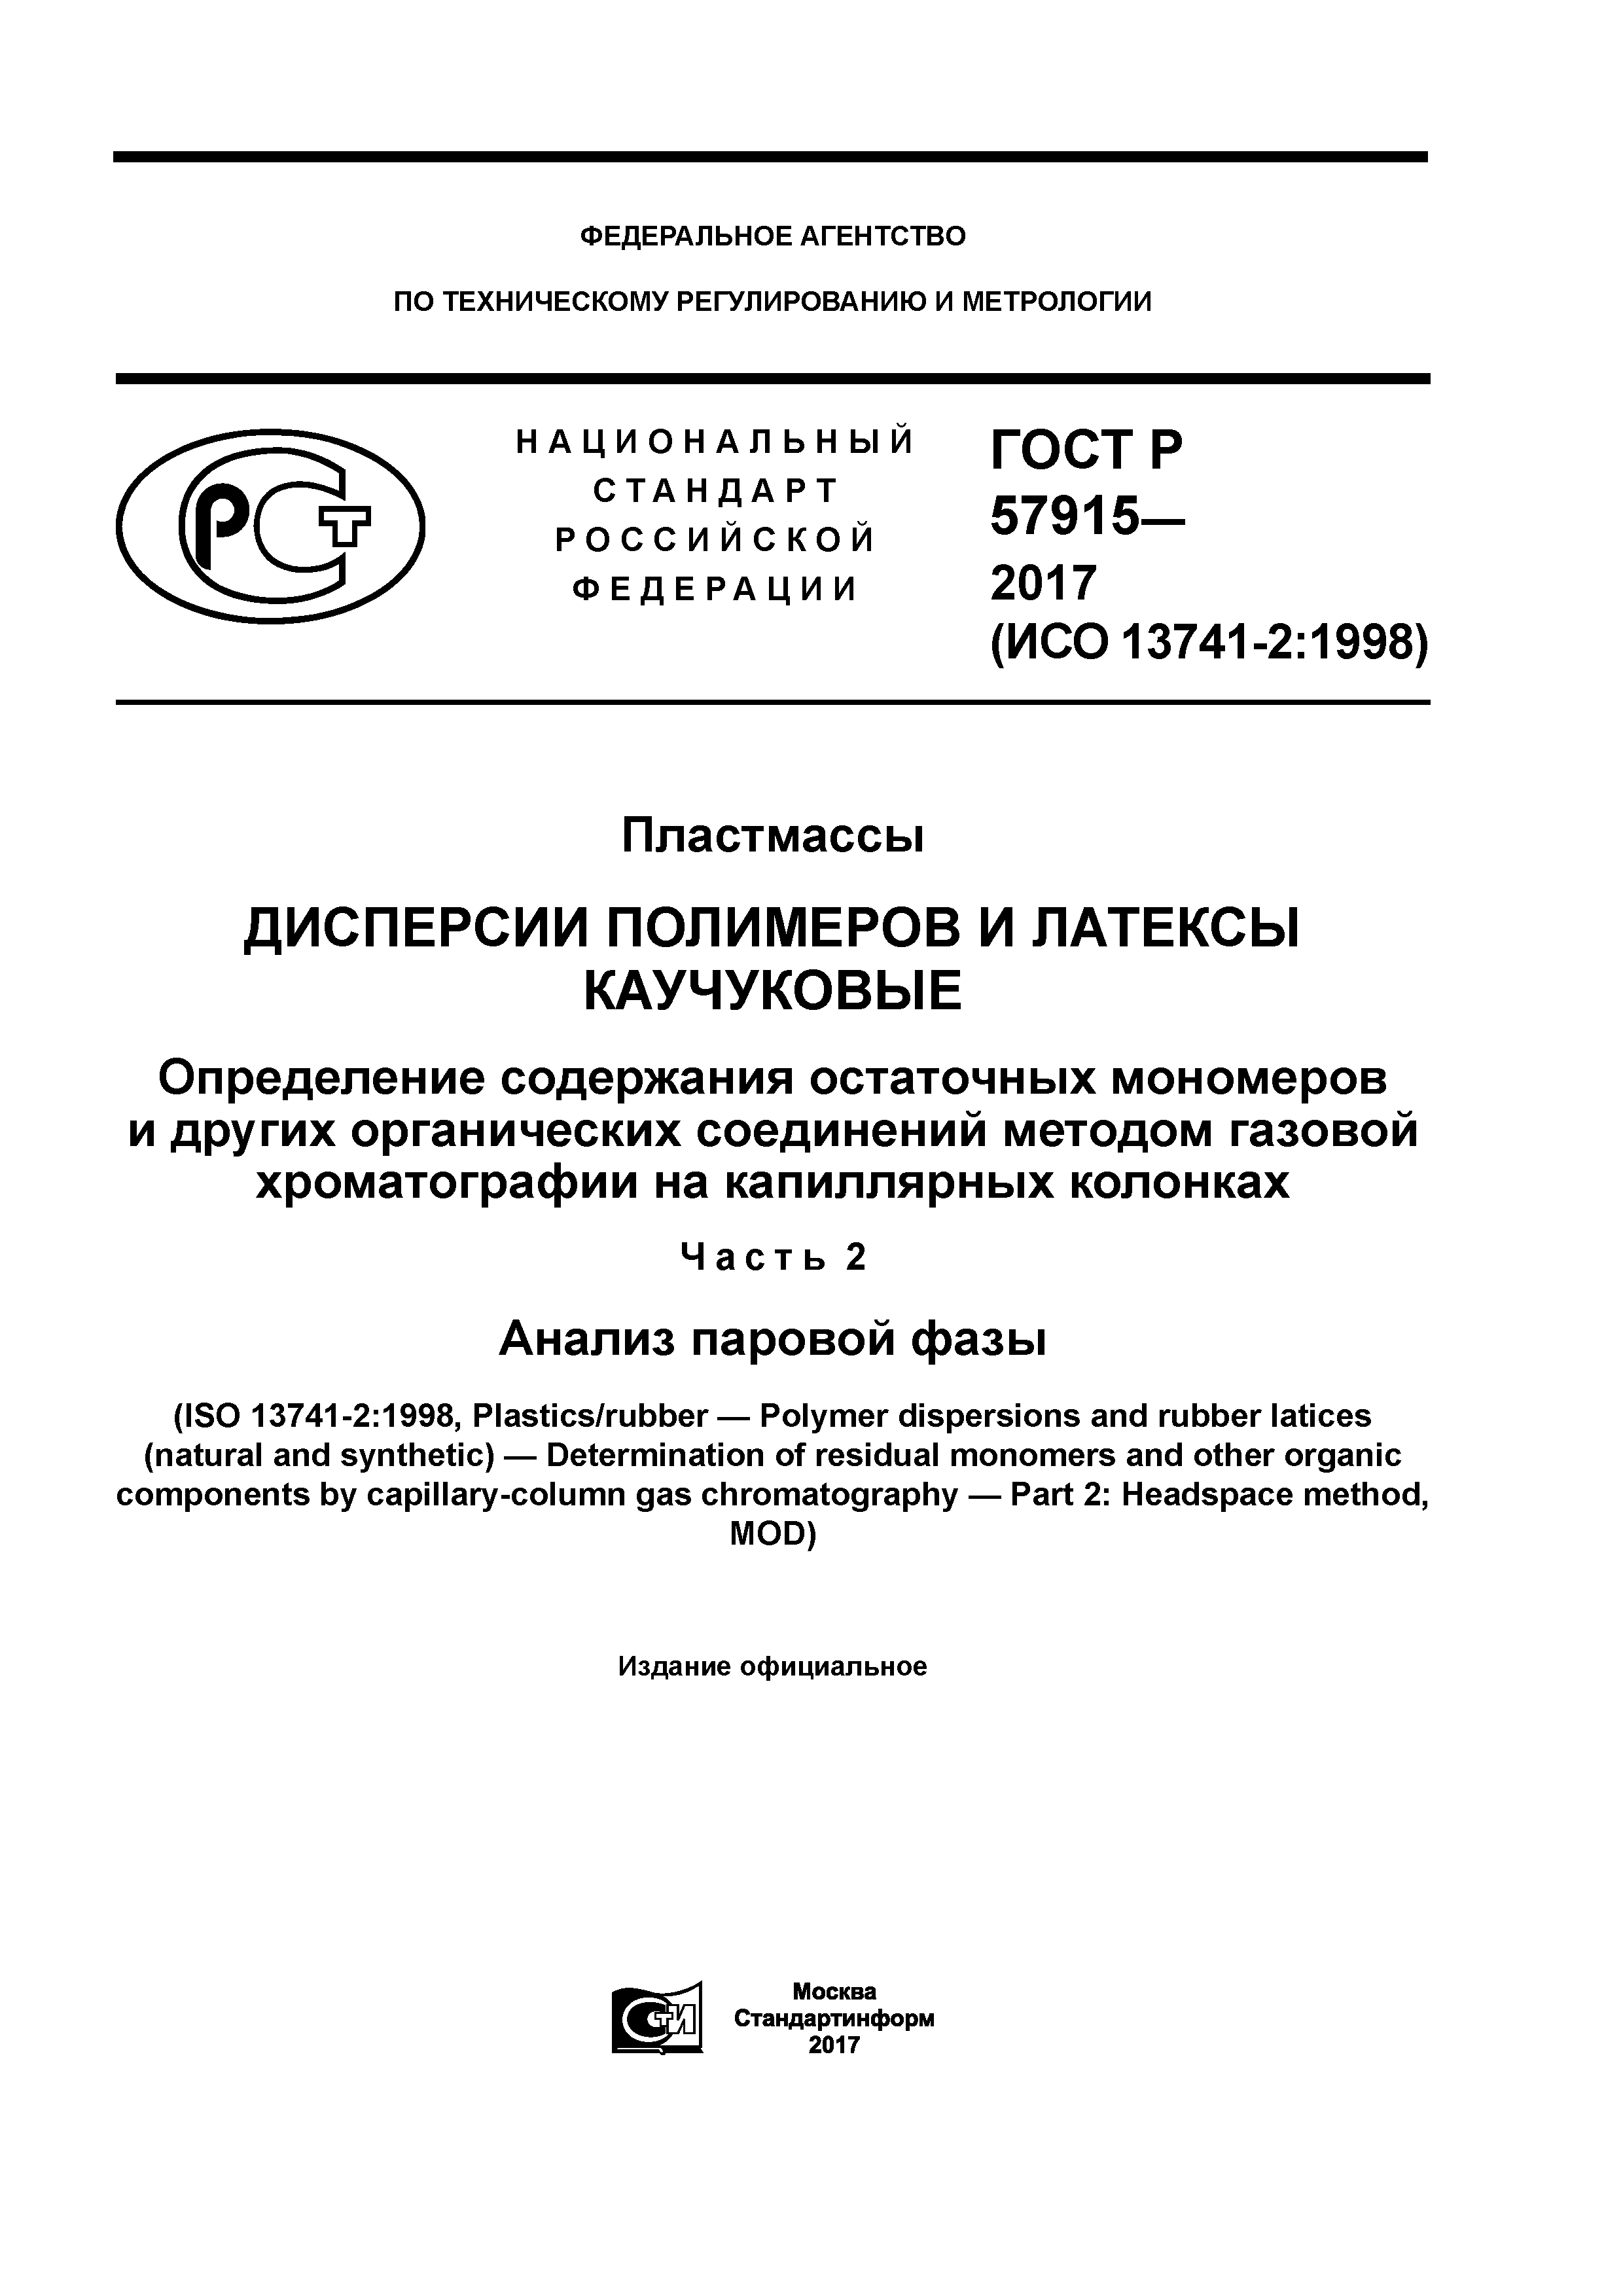 ГОСТ Р 57915-2017